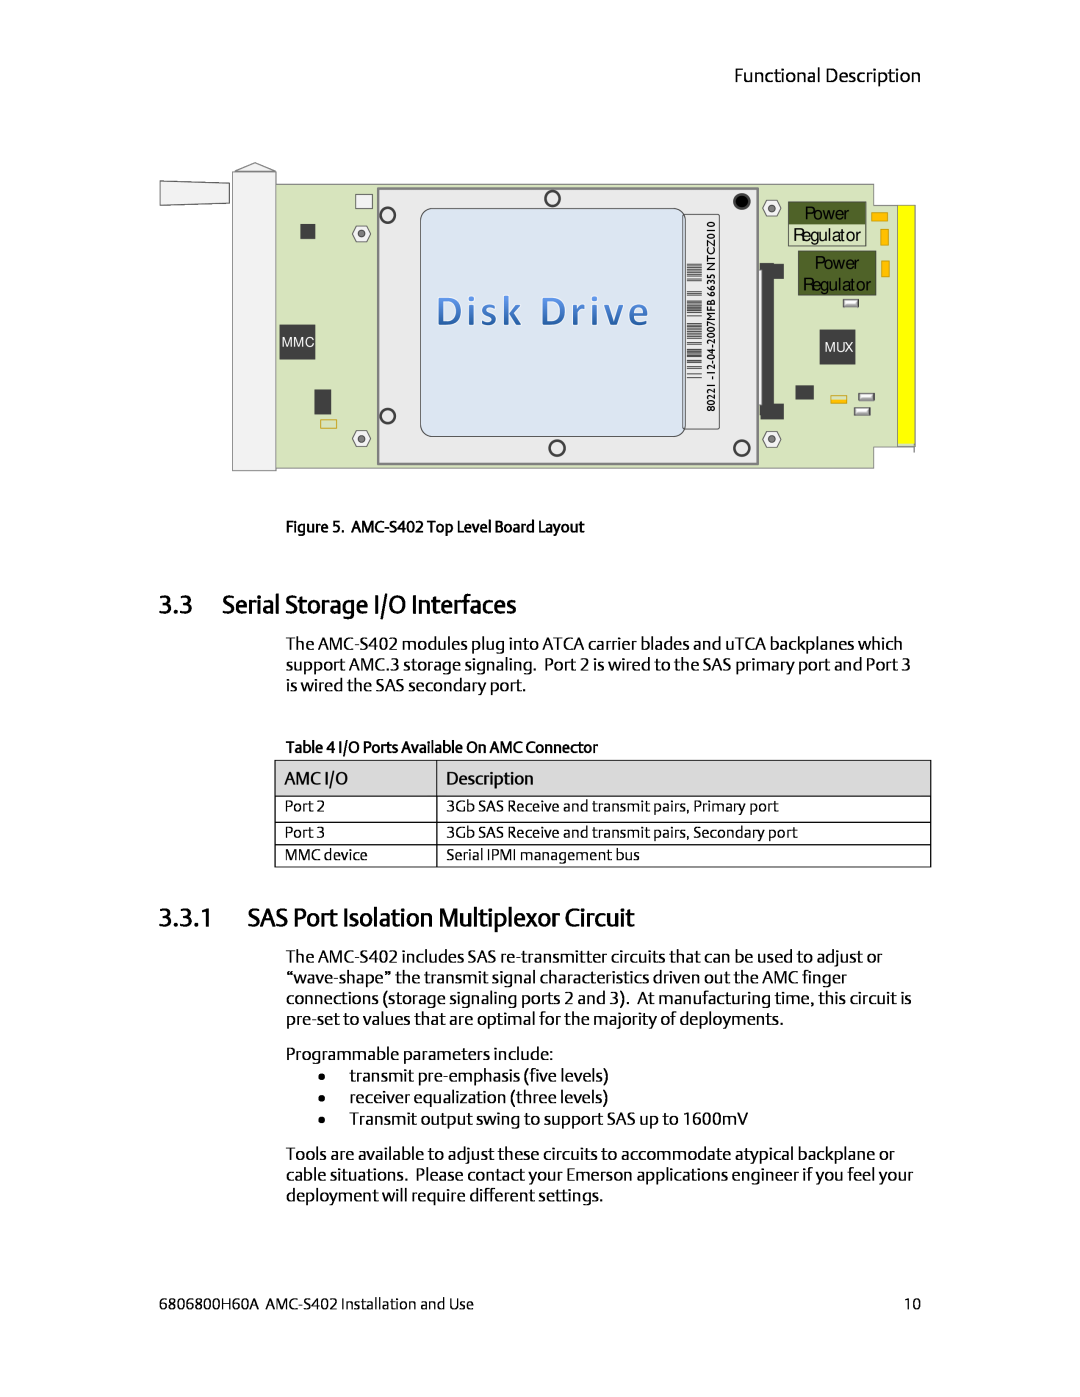 Emerson AMC-S402 manual Serial Storage I/O Interfaces, SAS Port Isolation Multiplexor Circuit, Functional Description 